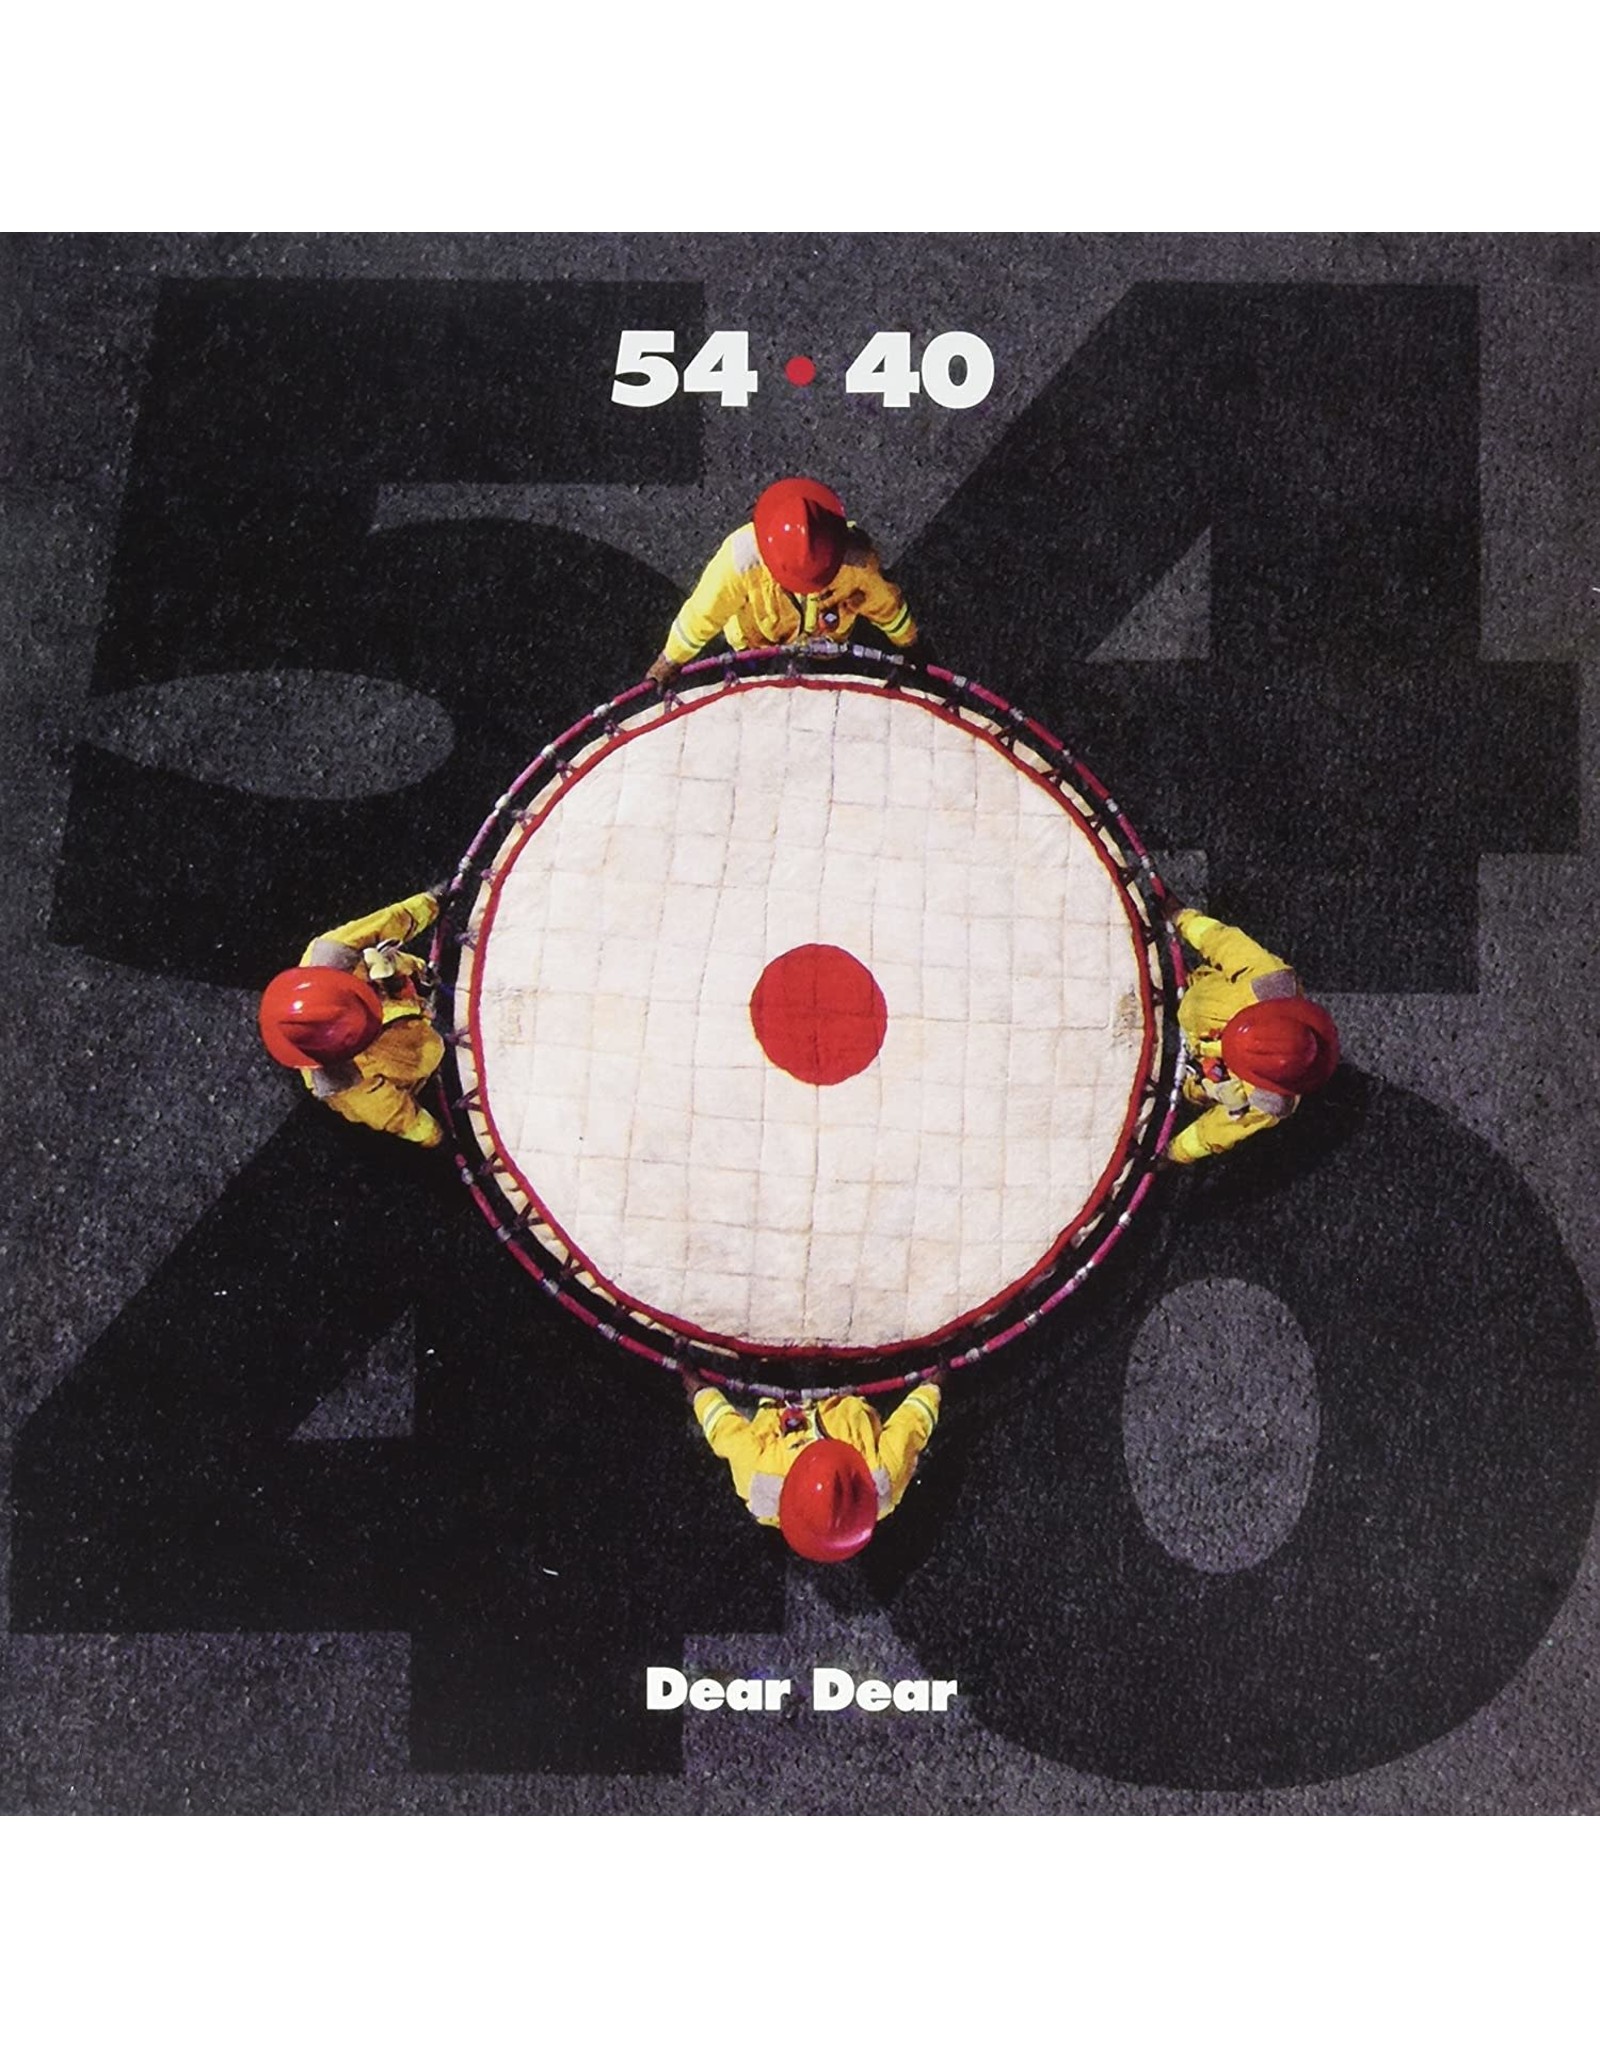 54-40 - Dear Dear (30th Anniversary) [Red Vinyl]